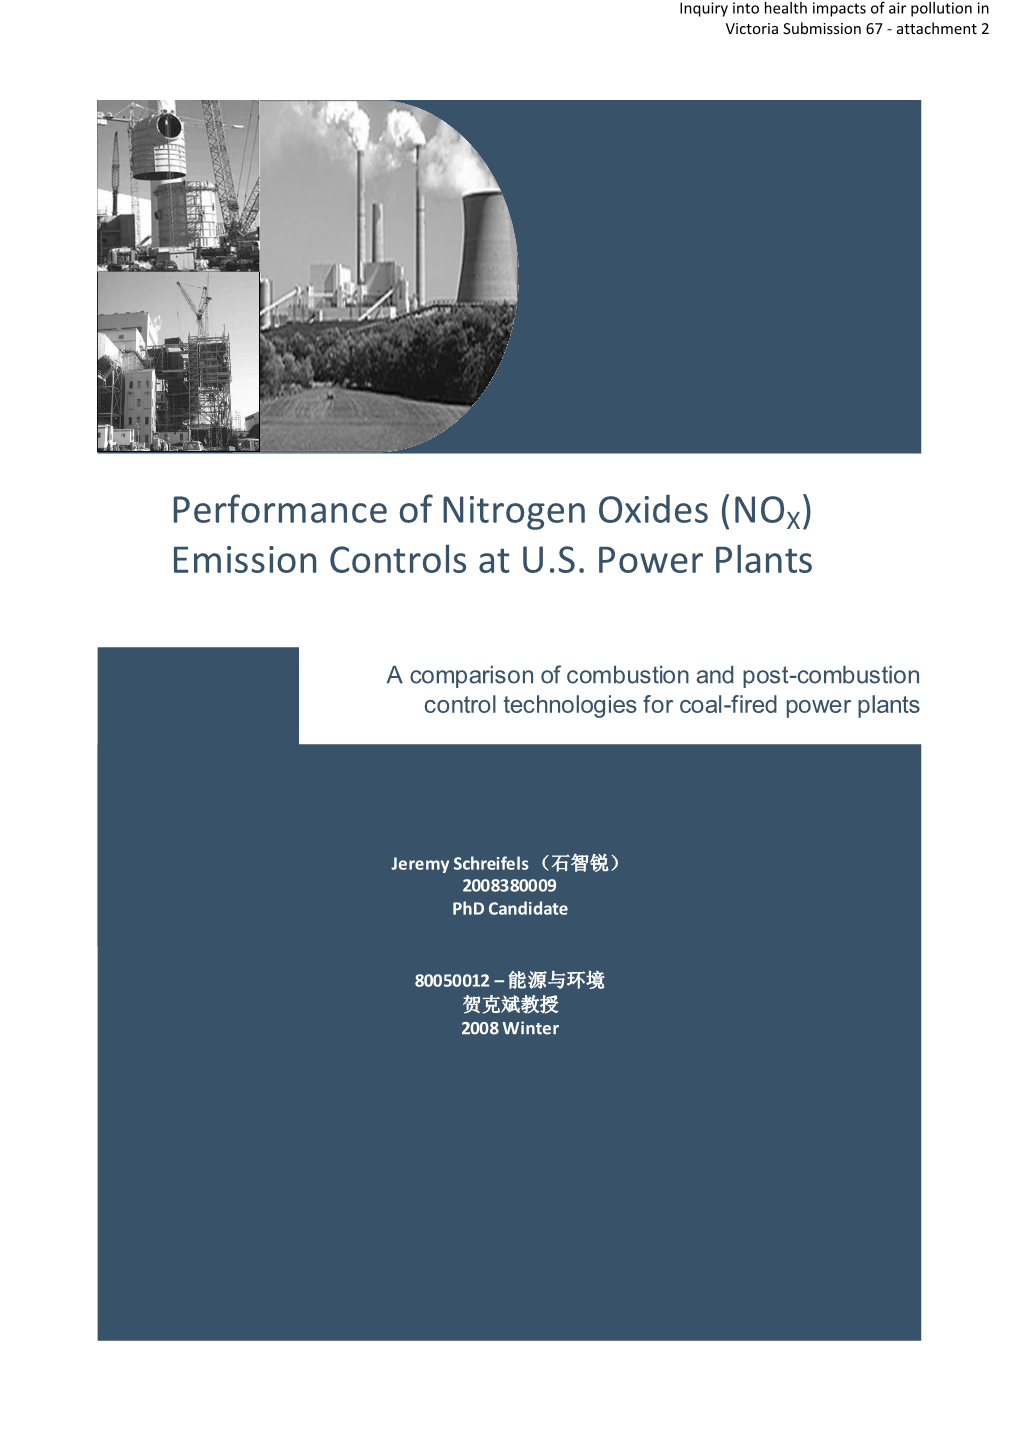 Performance of Nitrogen Oxides (NOX) Emission Controls at U.S. Power Plants